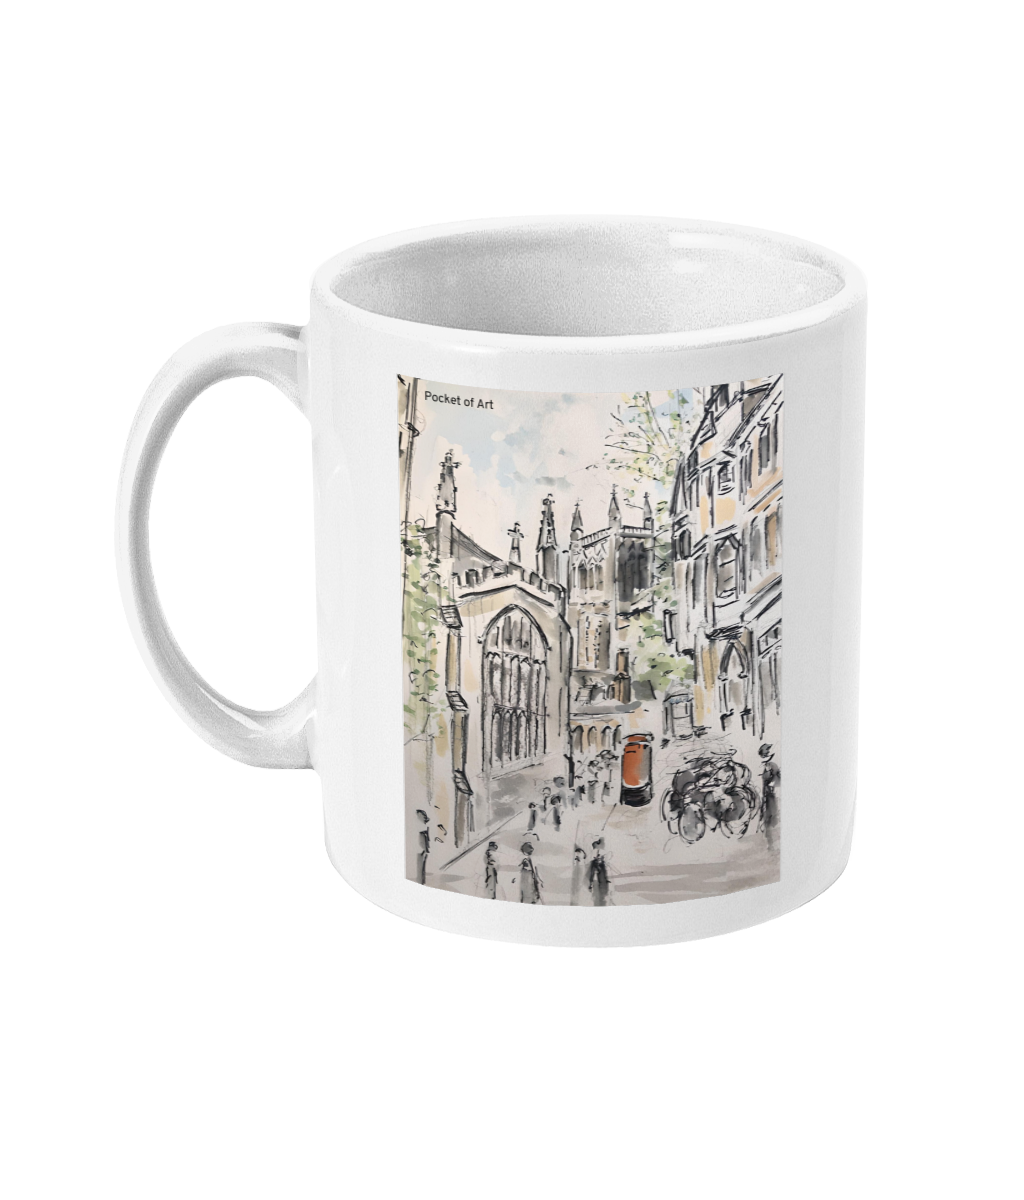 Mug with Trinity St, Cambridge